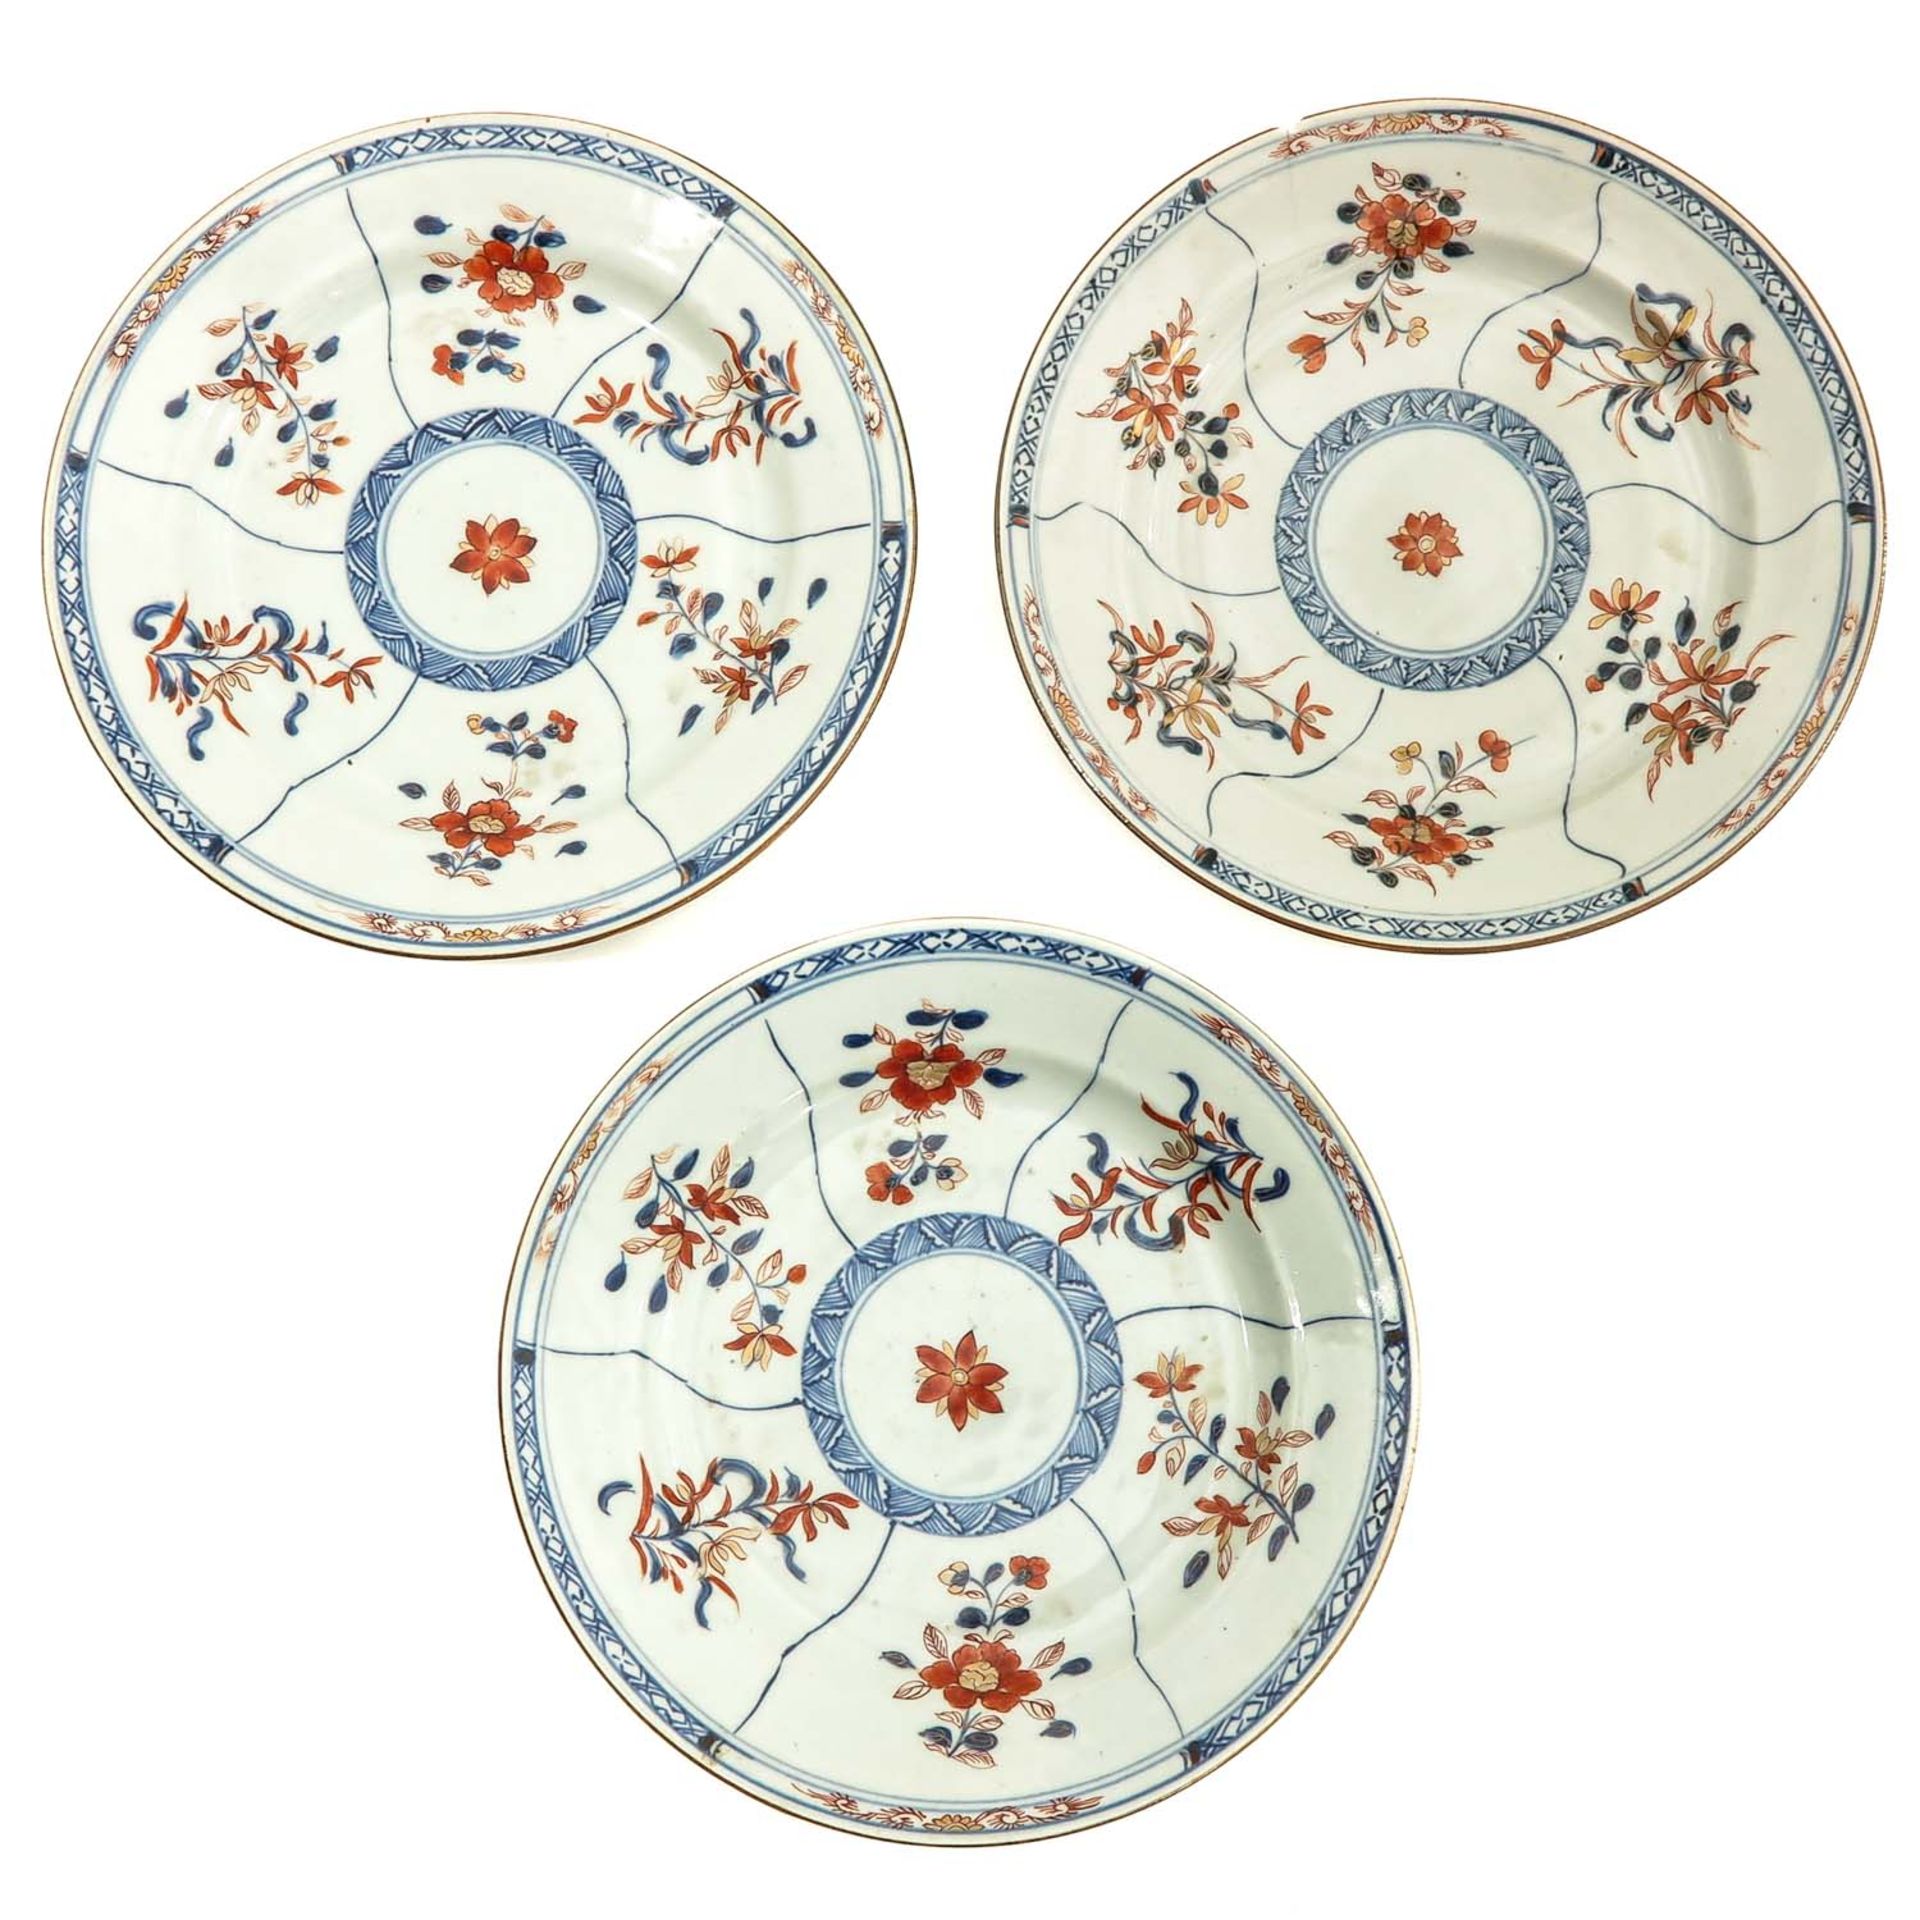 A Series of 3 Imari Plates